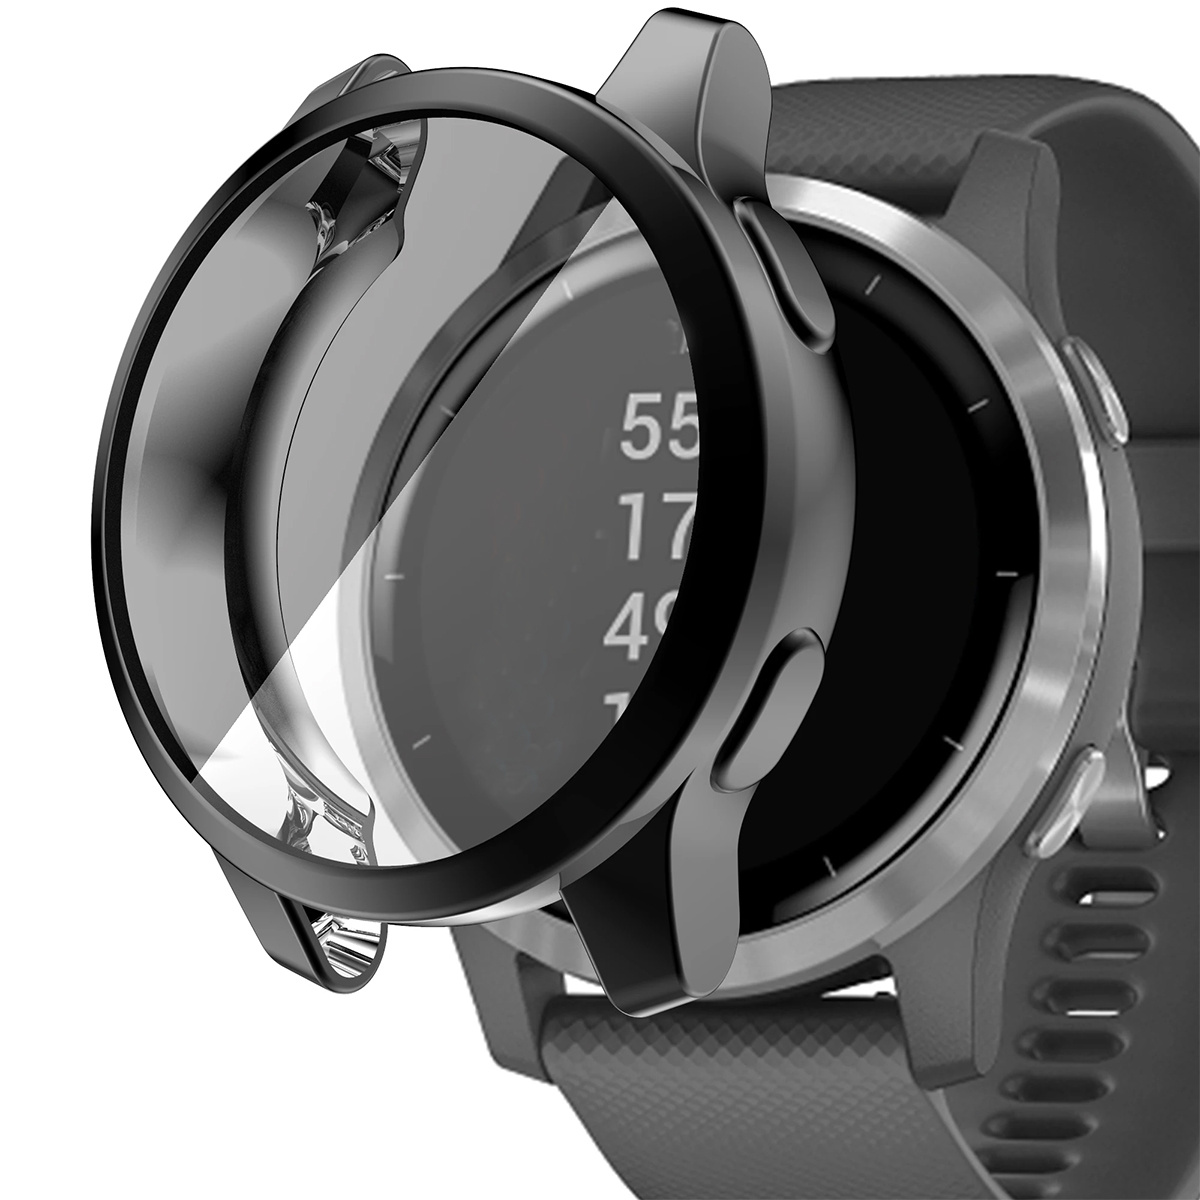 For Gts 4 Mini Full Edge-screen Protector Watch Bumper-shell